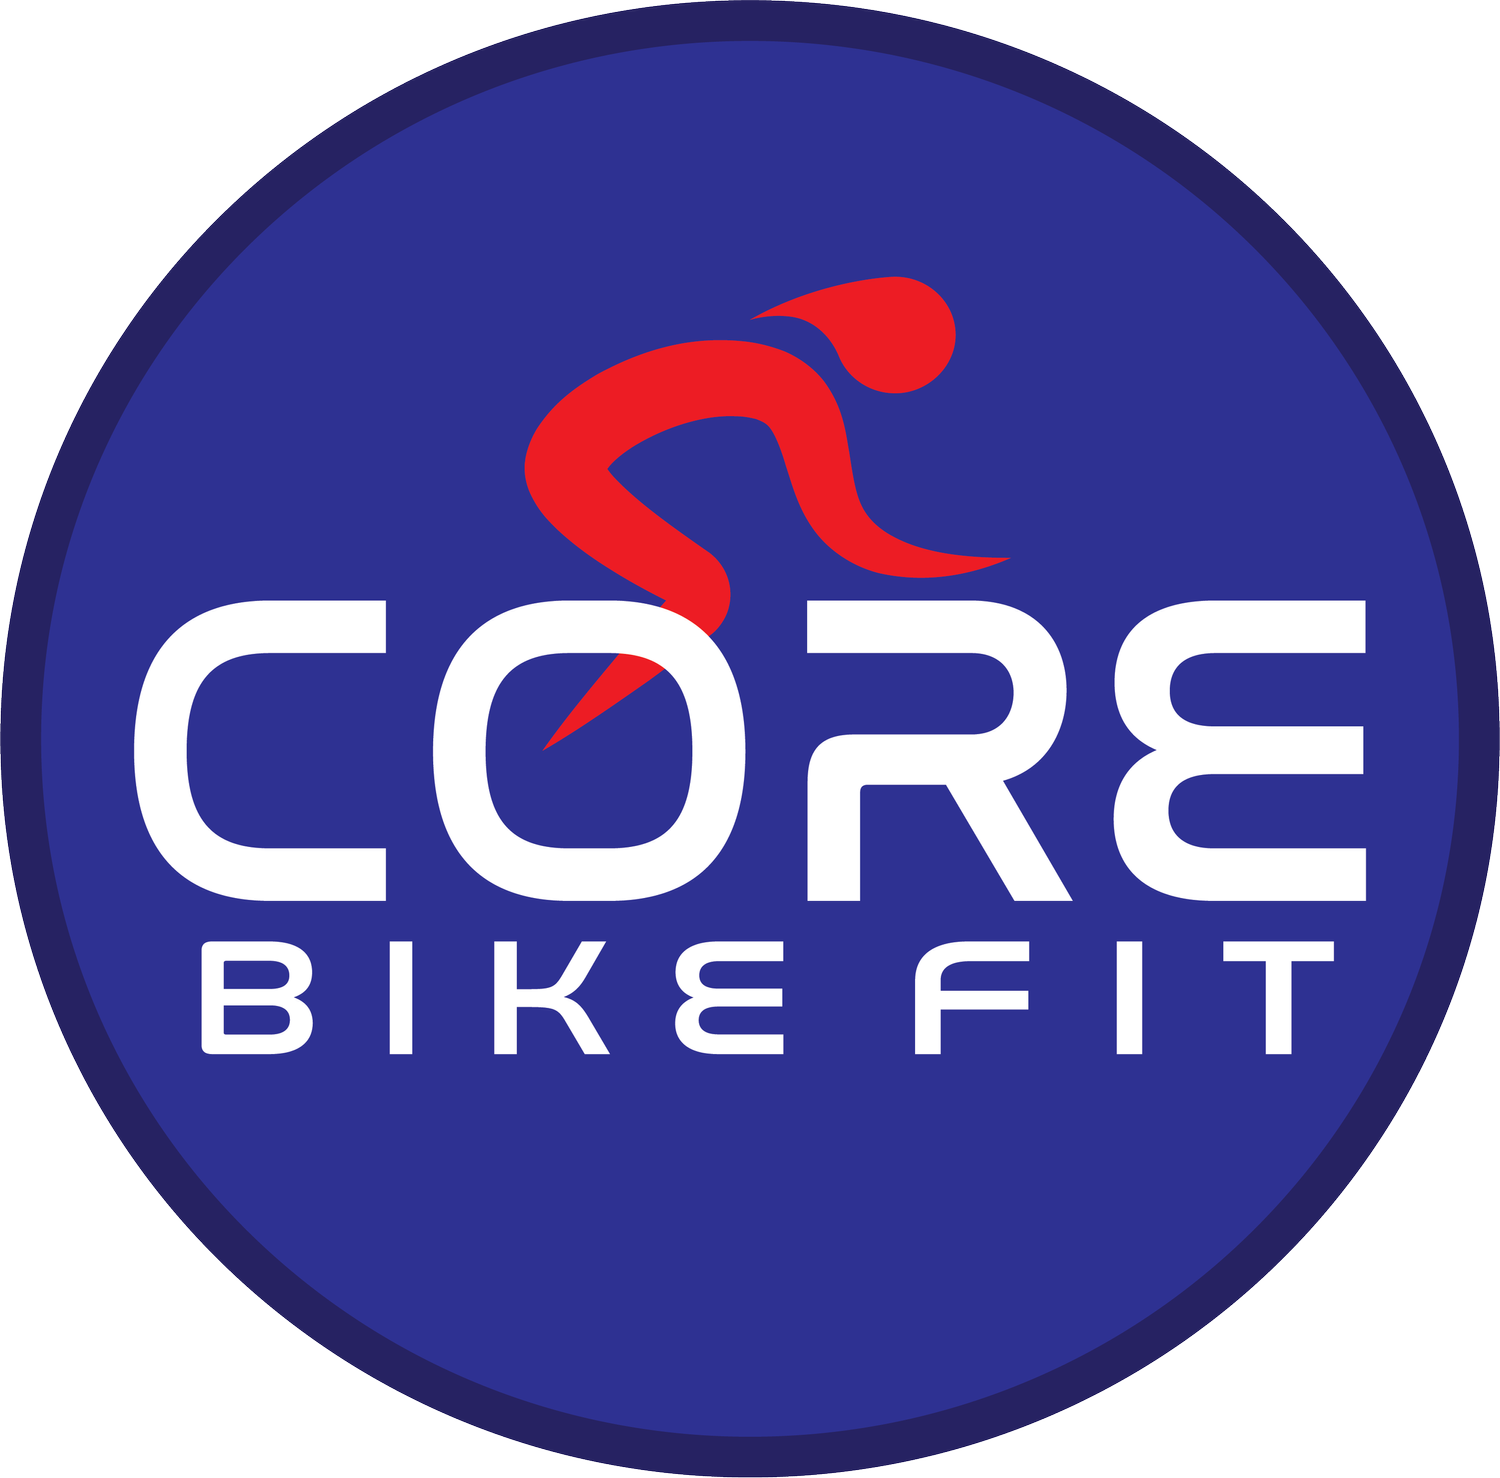 Bike fit Devon | Bike fit service based in Topsham, Exeter | CORE Bike Fit